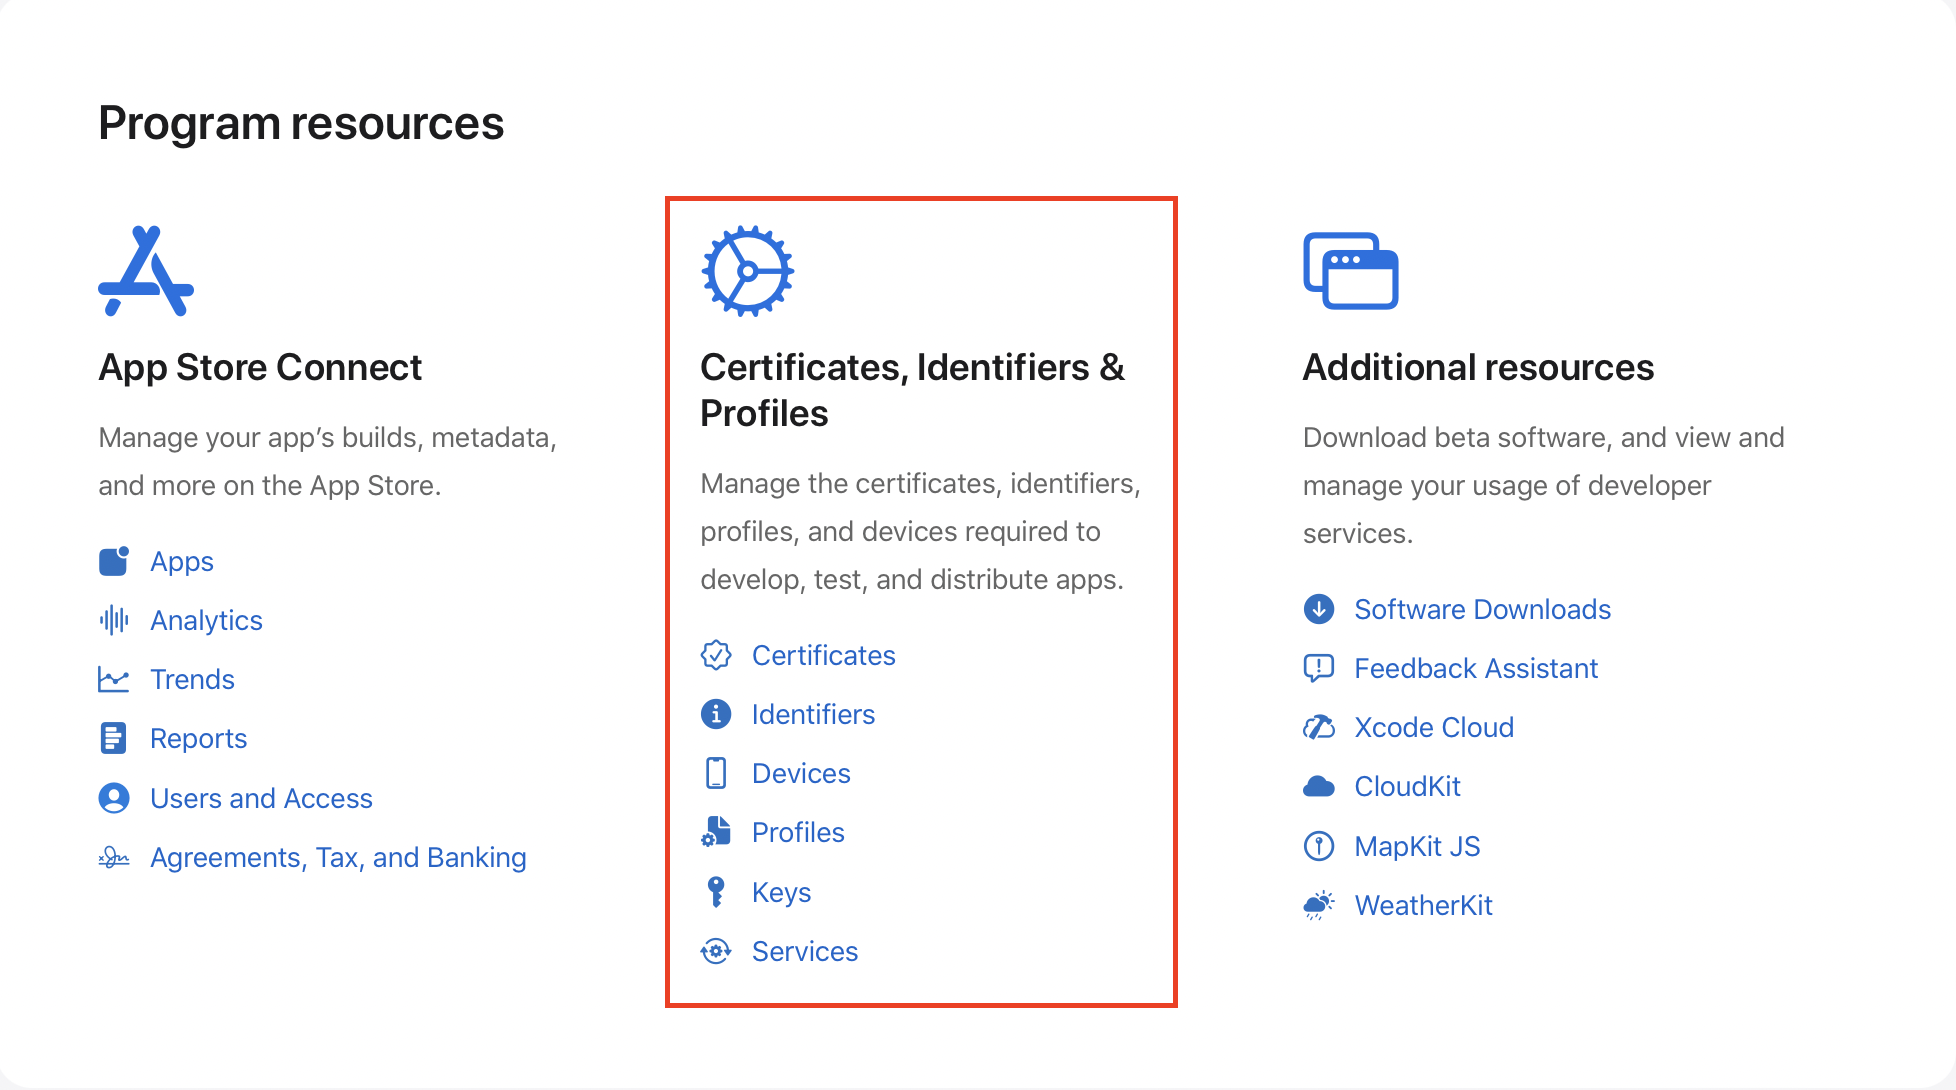 Certificates, Identifiers & Profiles